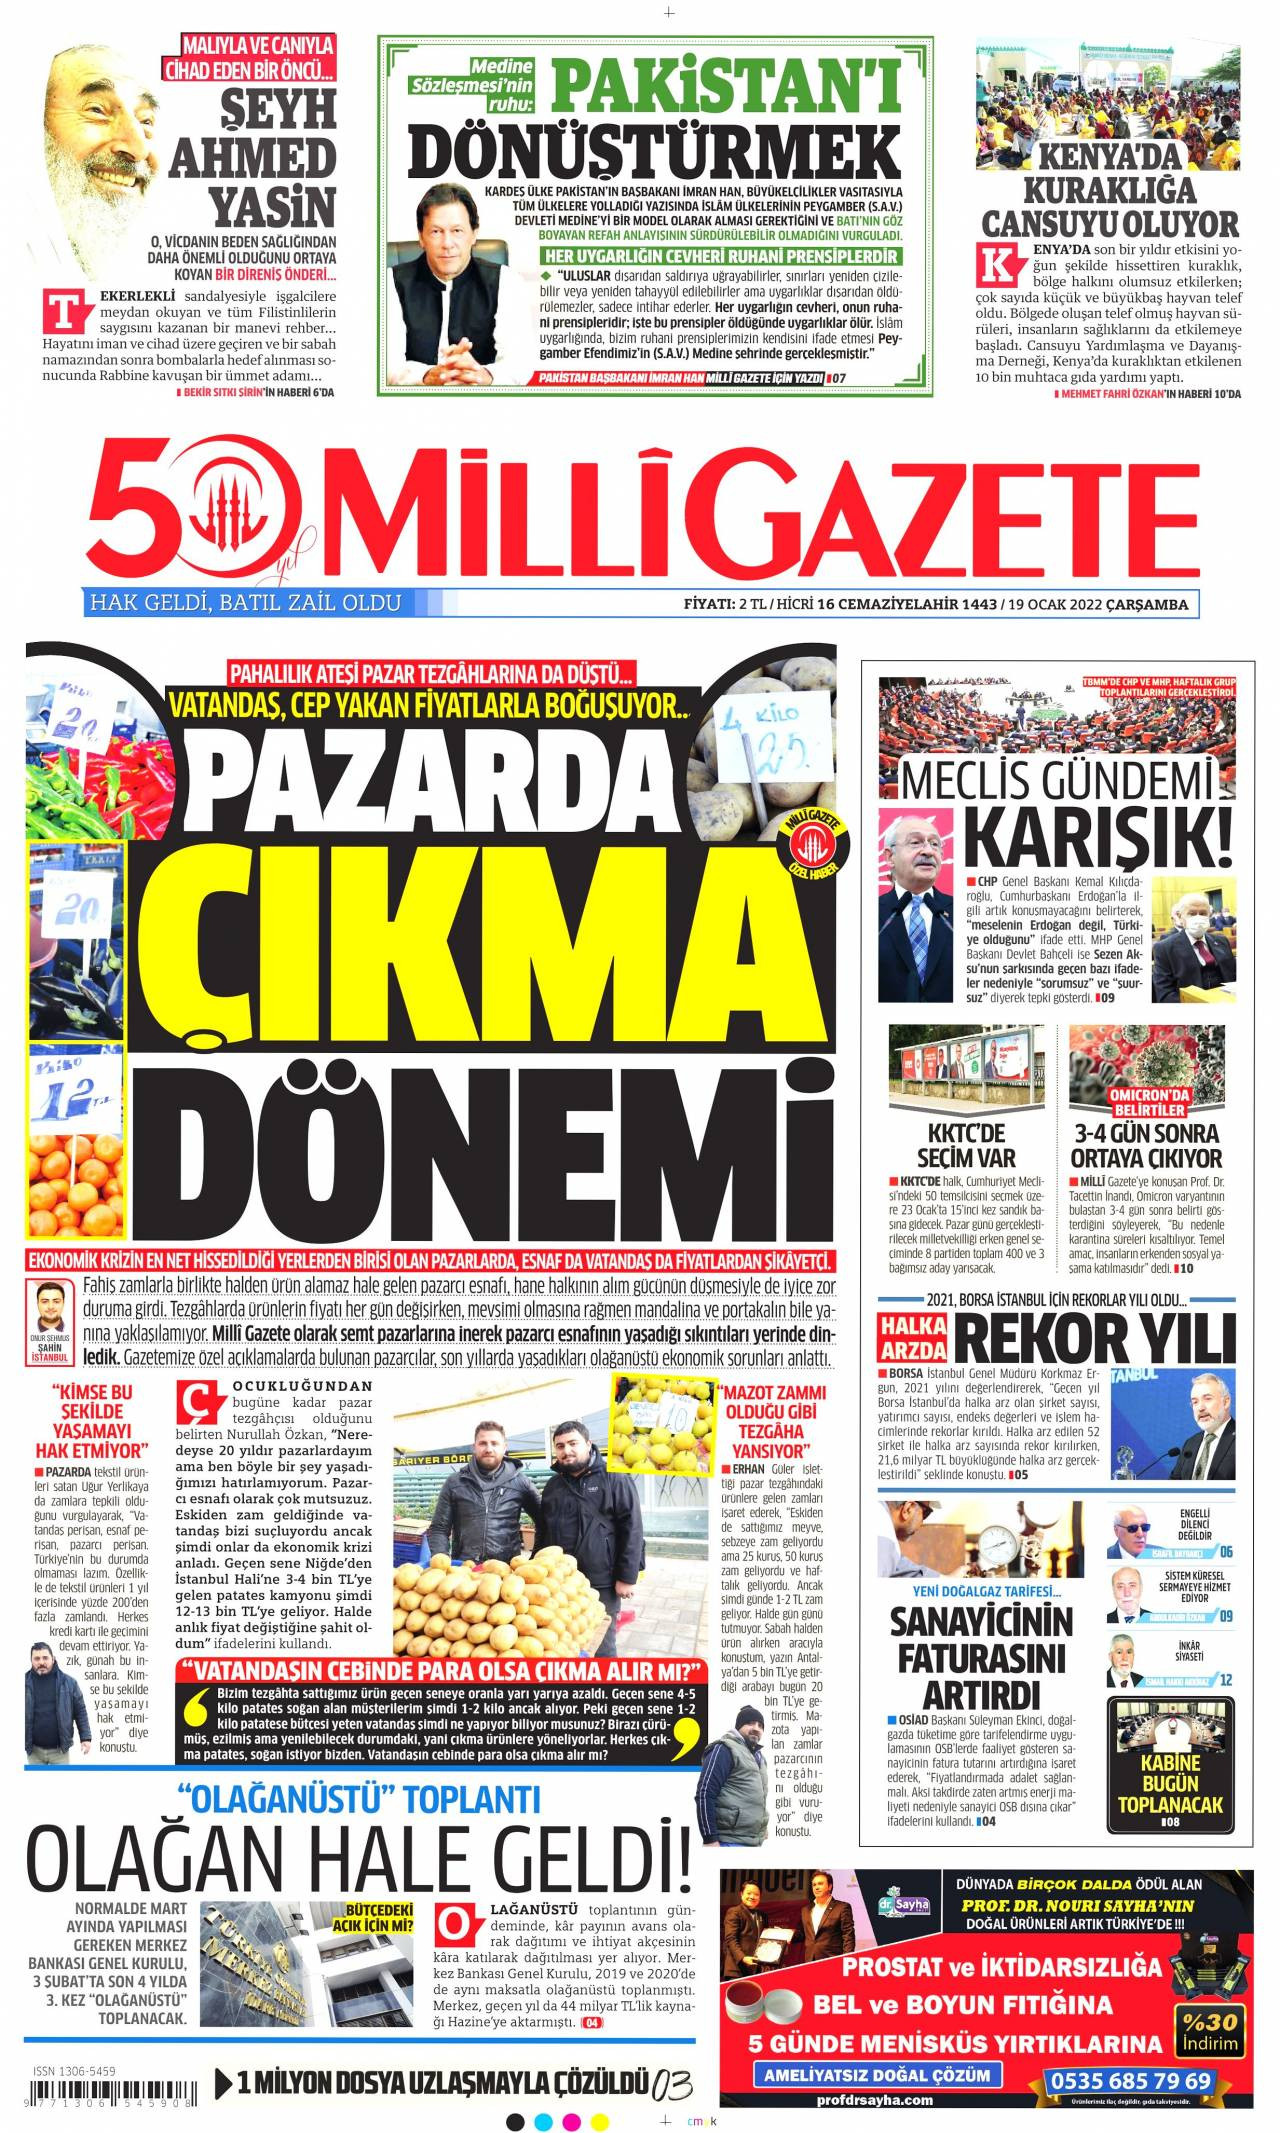 Milli Gazete gazetesi 